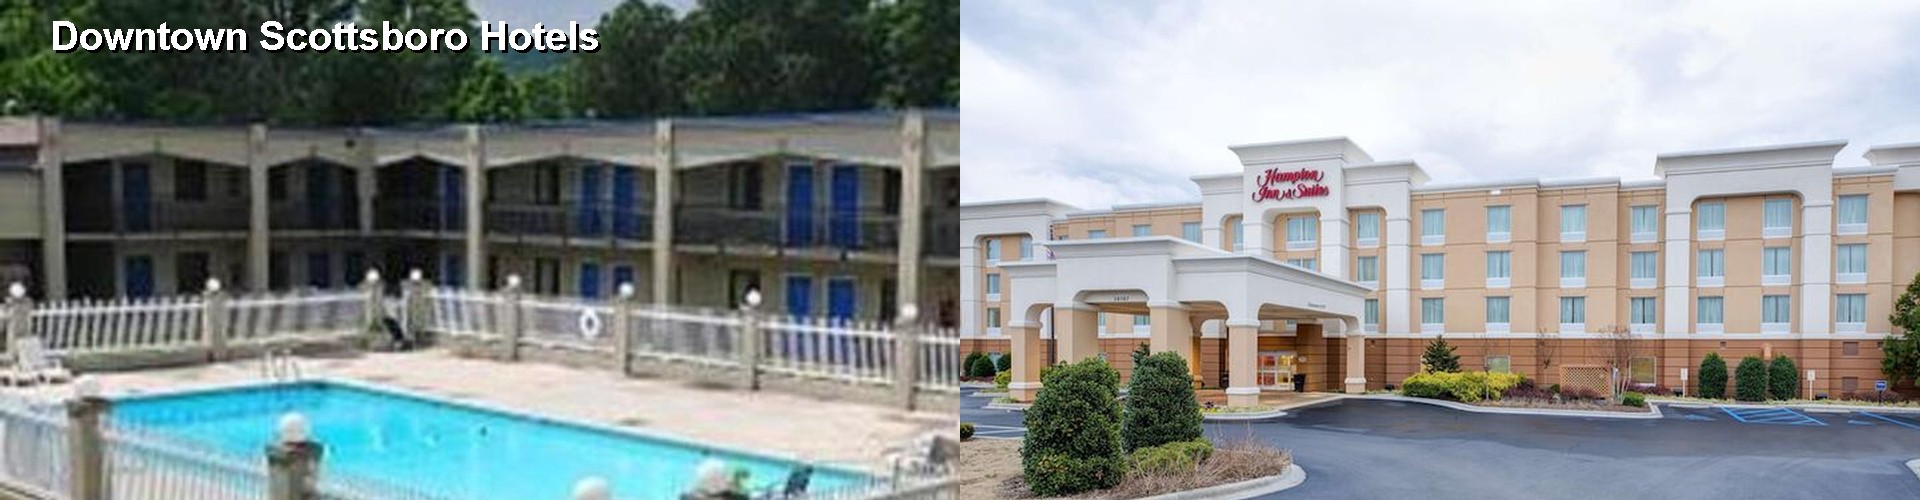 2 Best Hotels near Downtown Scottsboro